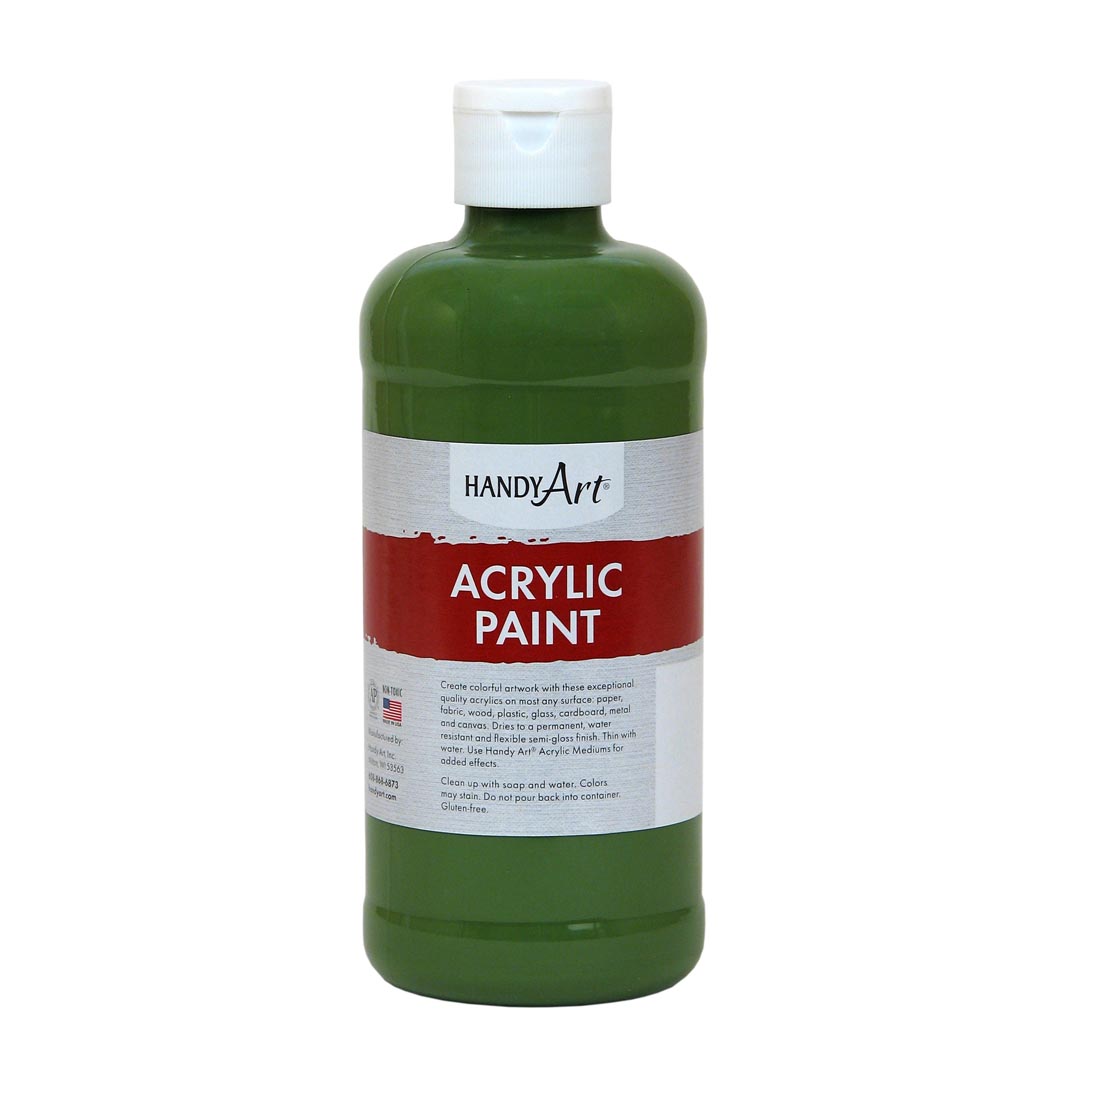 Pint Bottle of Green Oxide Handy Art Acrylic Paint